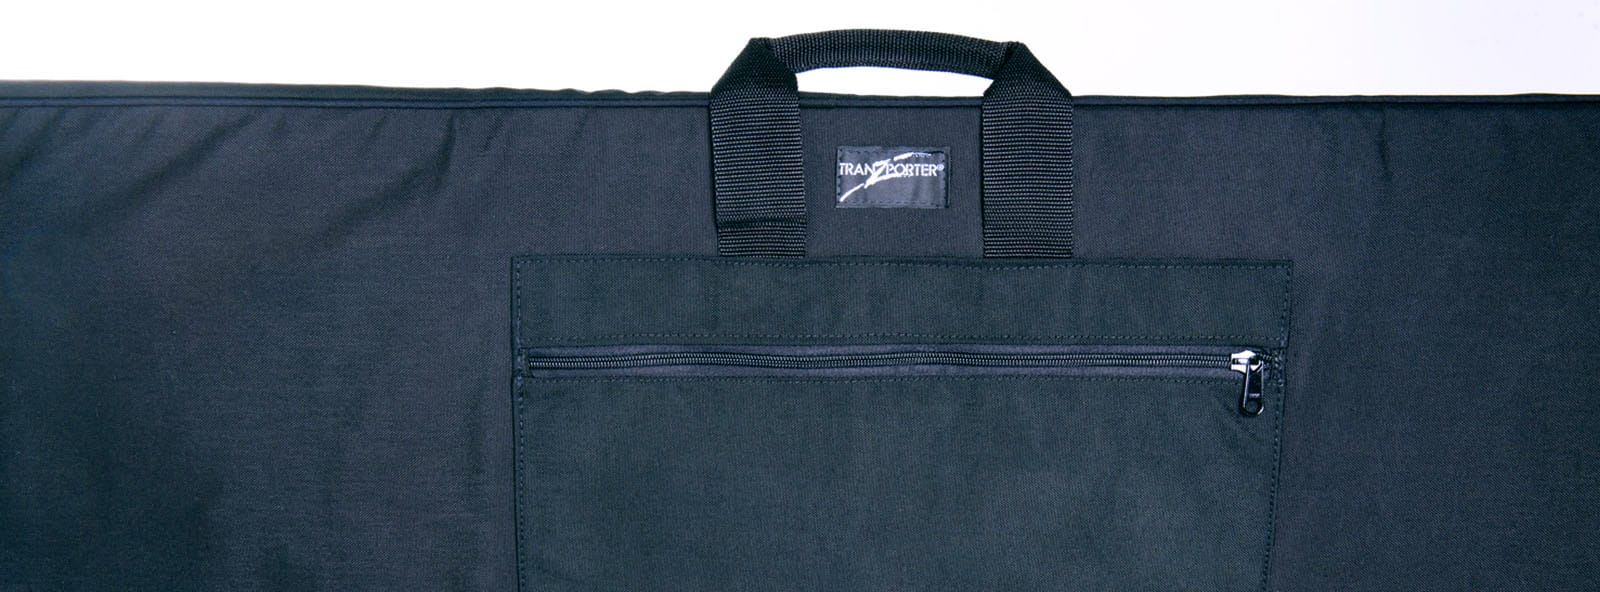 TRANSON Art Portfolio Case Artist Backpack Canvas Bag Large 26 x